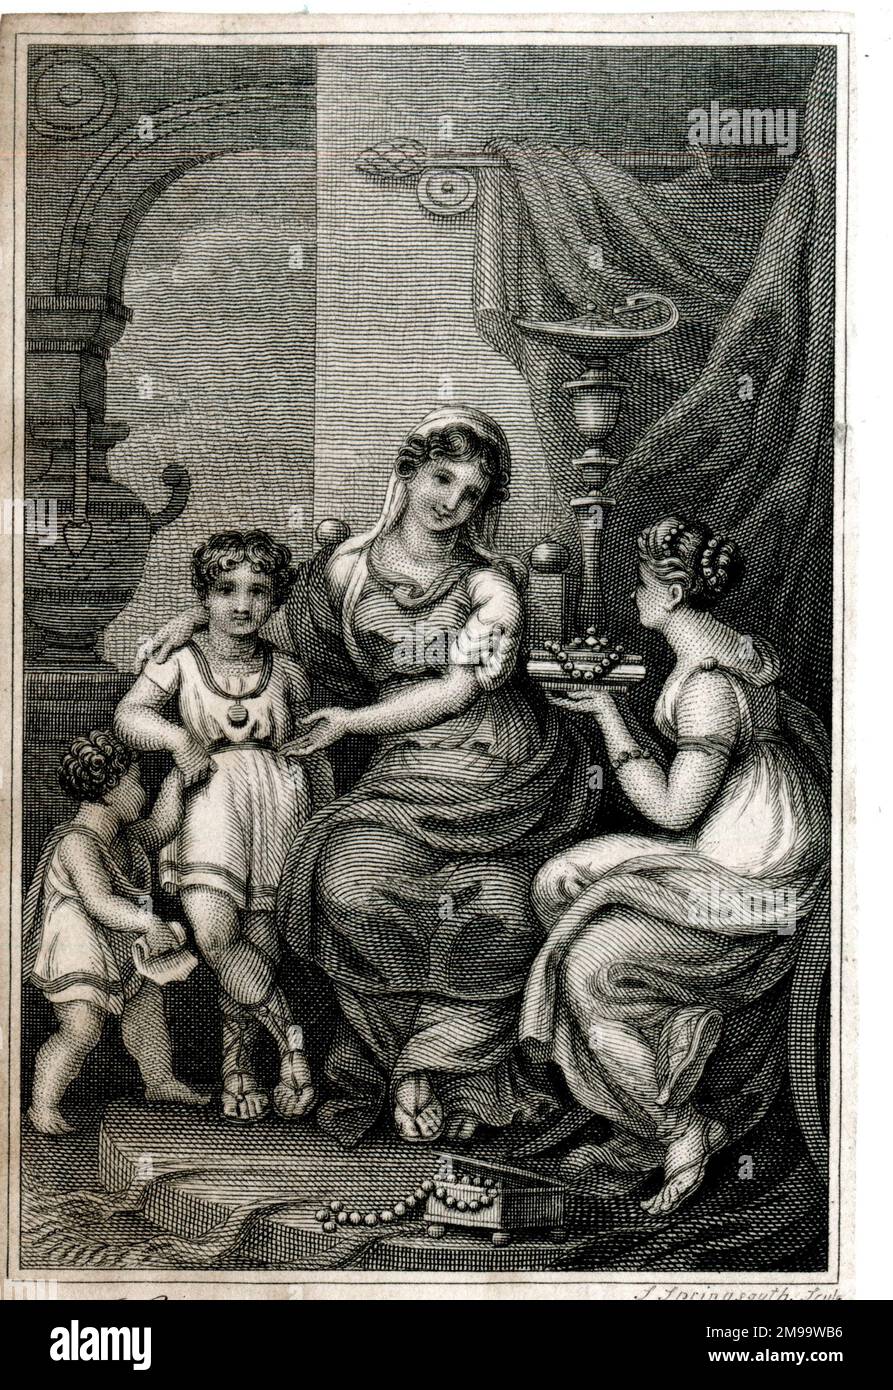 kauffmann cornelia pointing to her children as her treasures